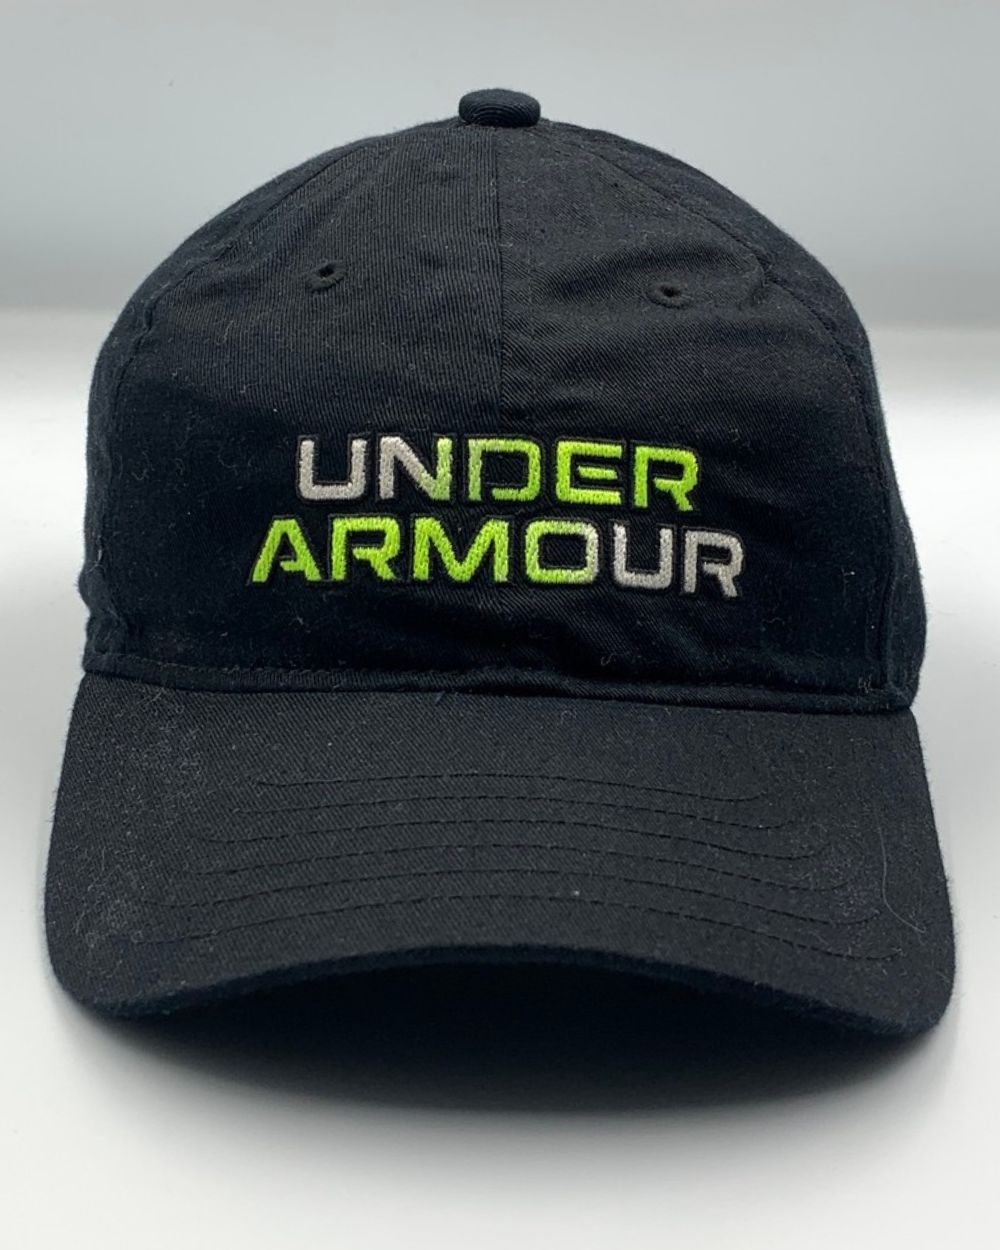 Under Armour Branded Original Branded Caps For Men